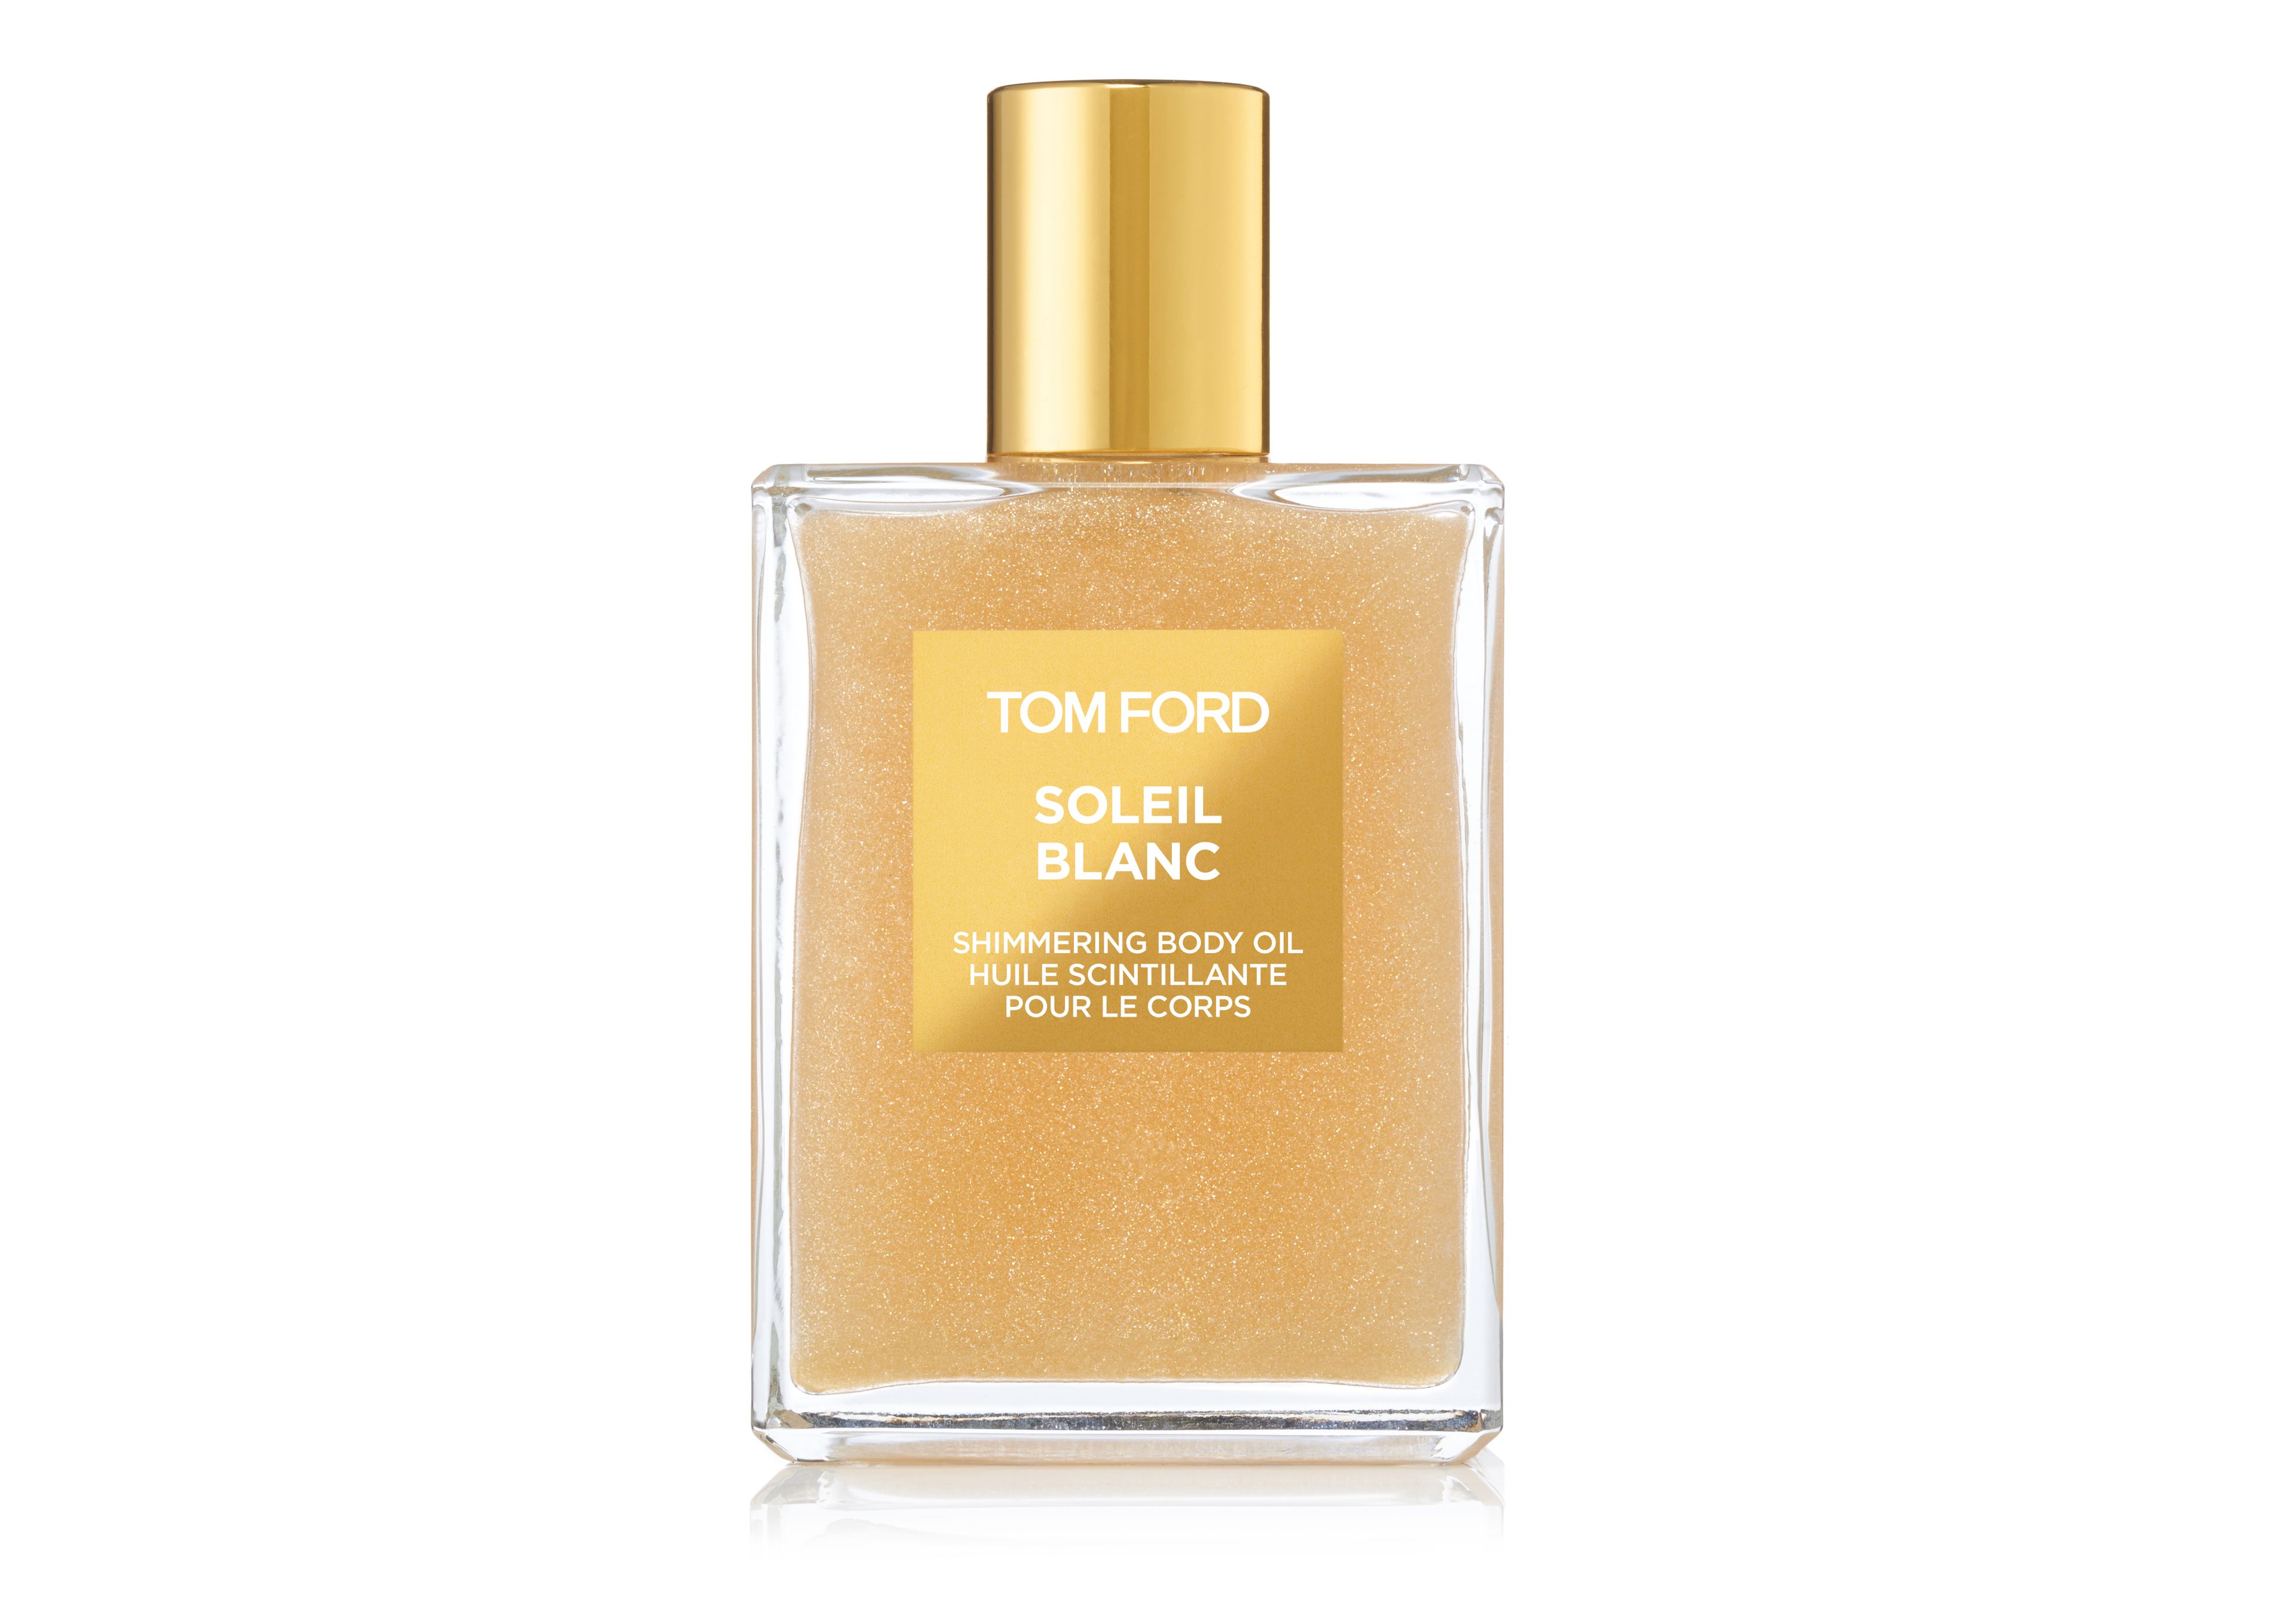 Tom Ford Soleil Blanc Shimmering Body Oil 1